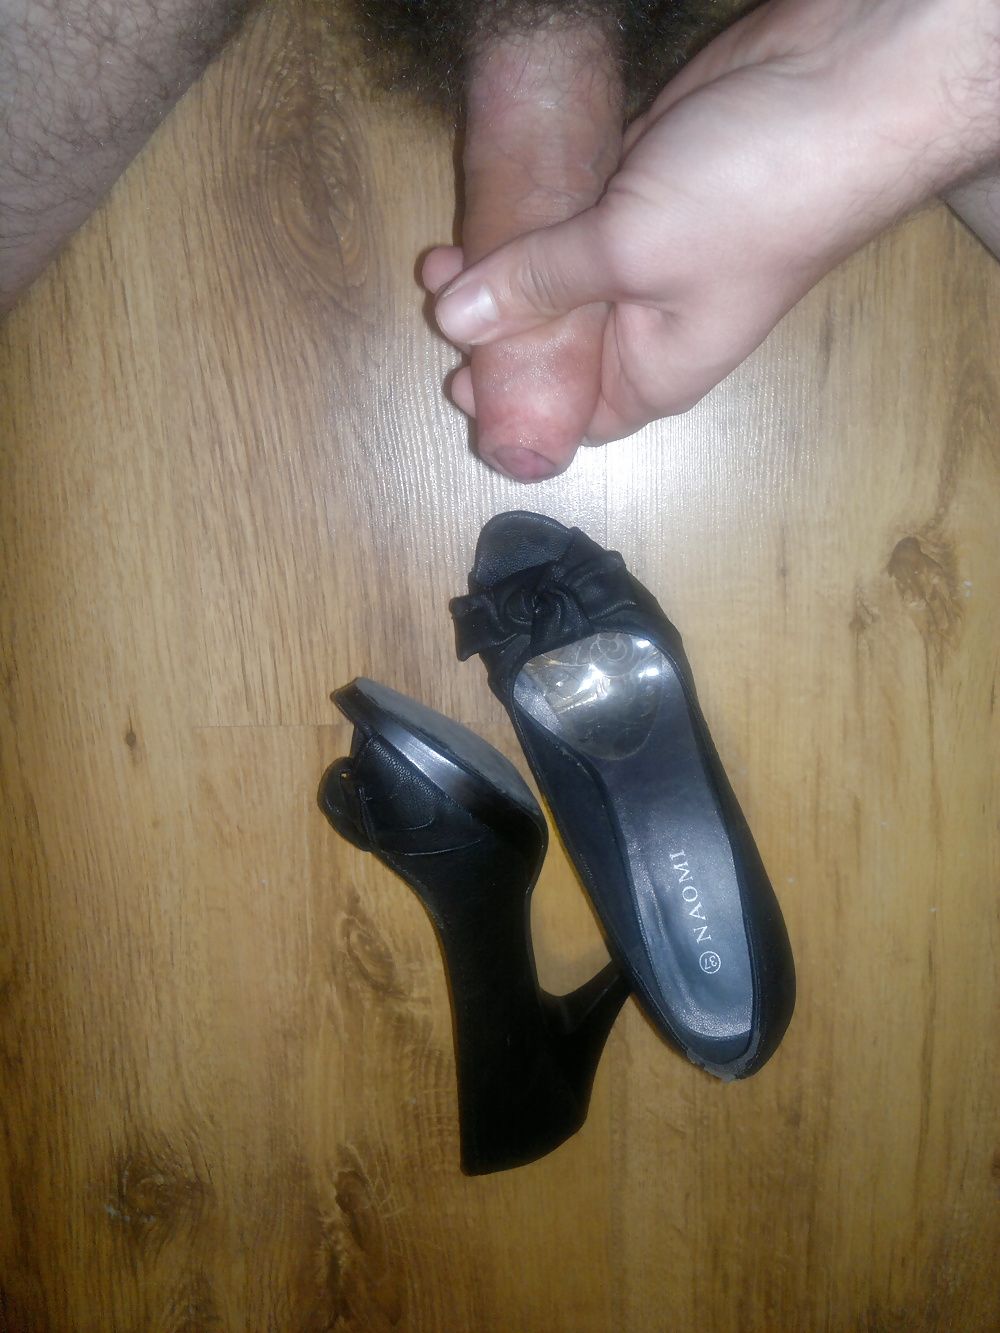 cuming on black heels #9